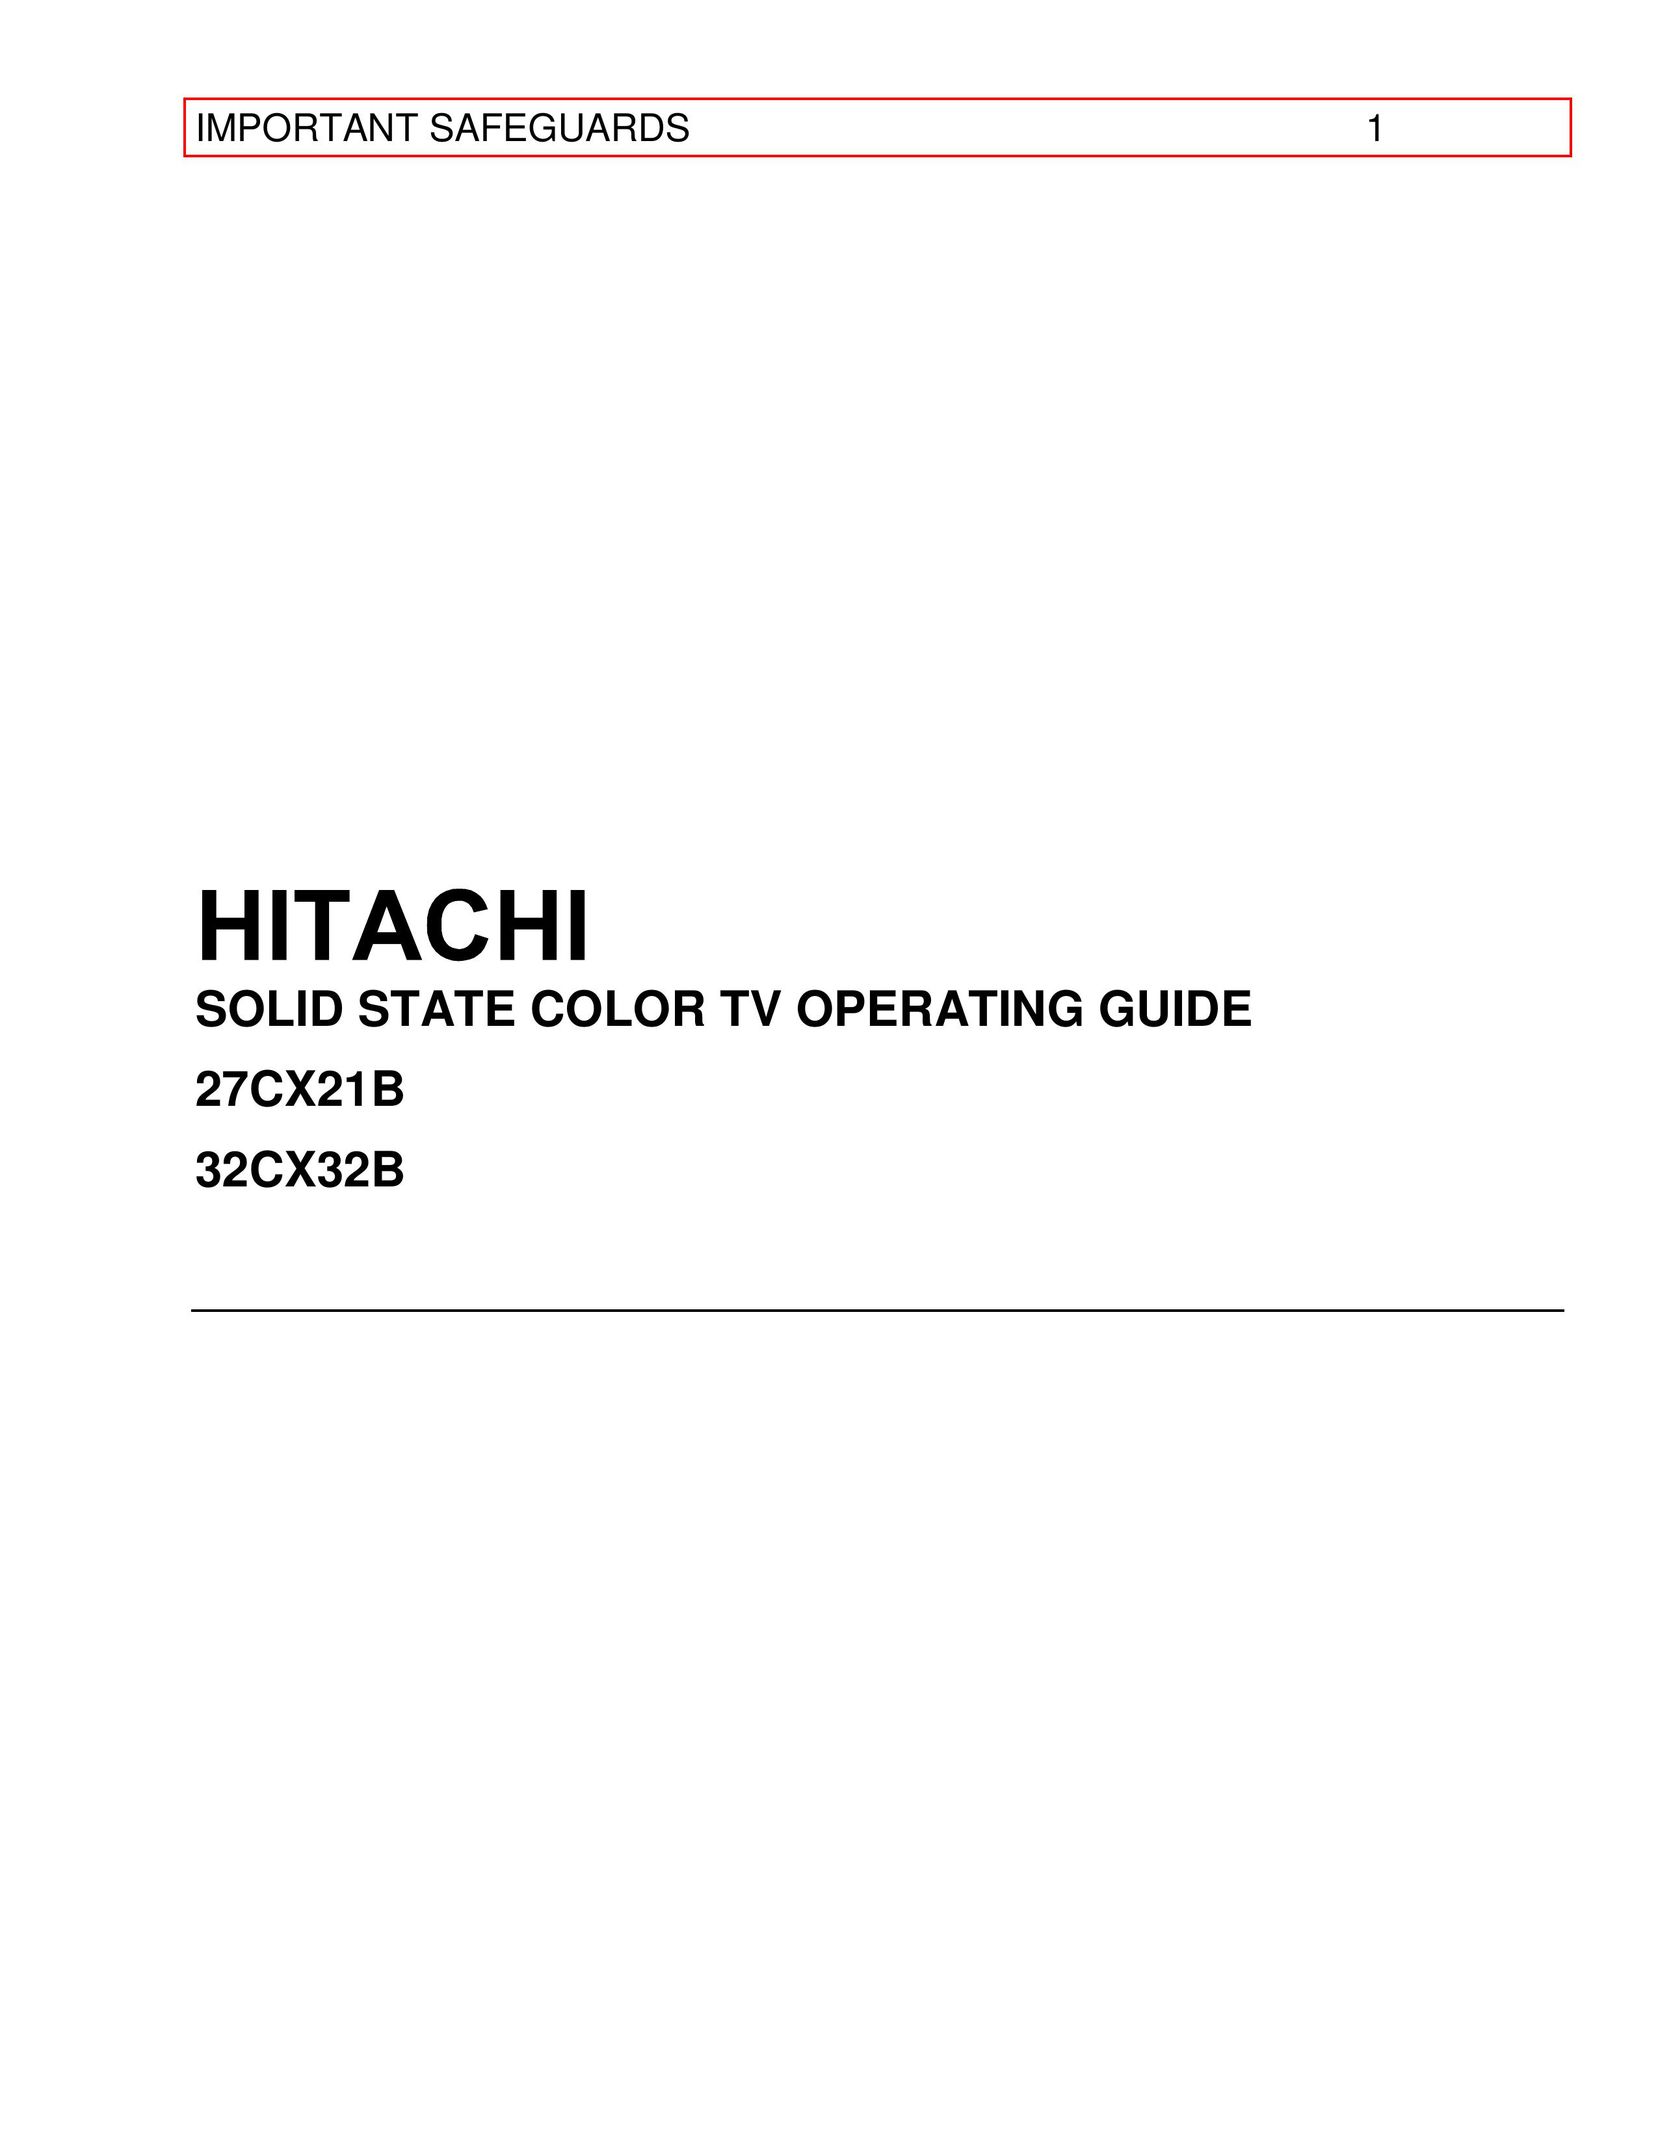 Hitachi 27CX21B CRT Television User Manual